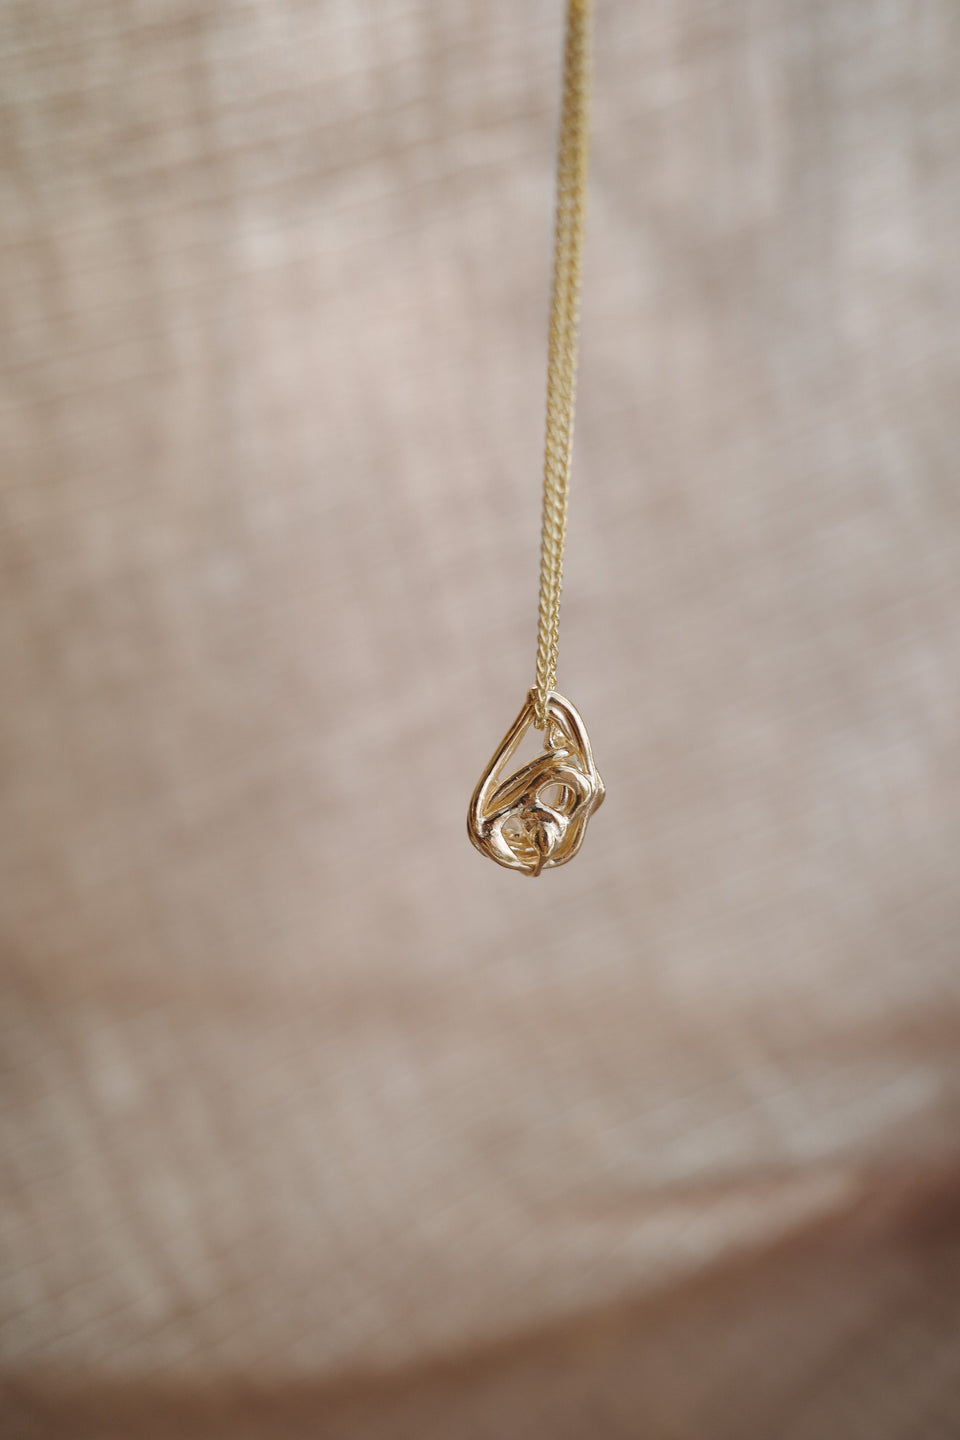 Tempest Pendant Necklaces with Rose Cut Sapphires